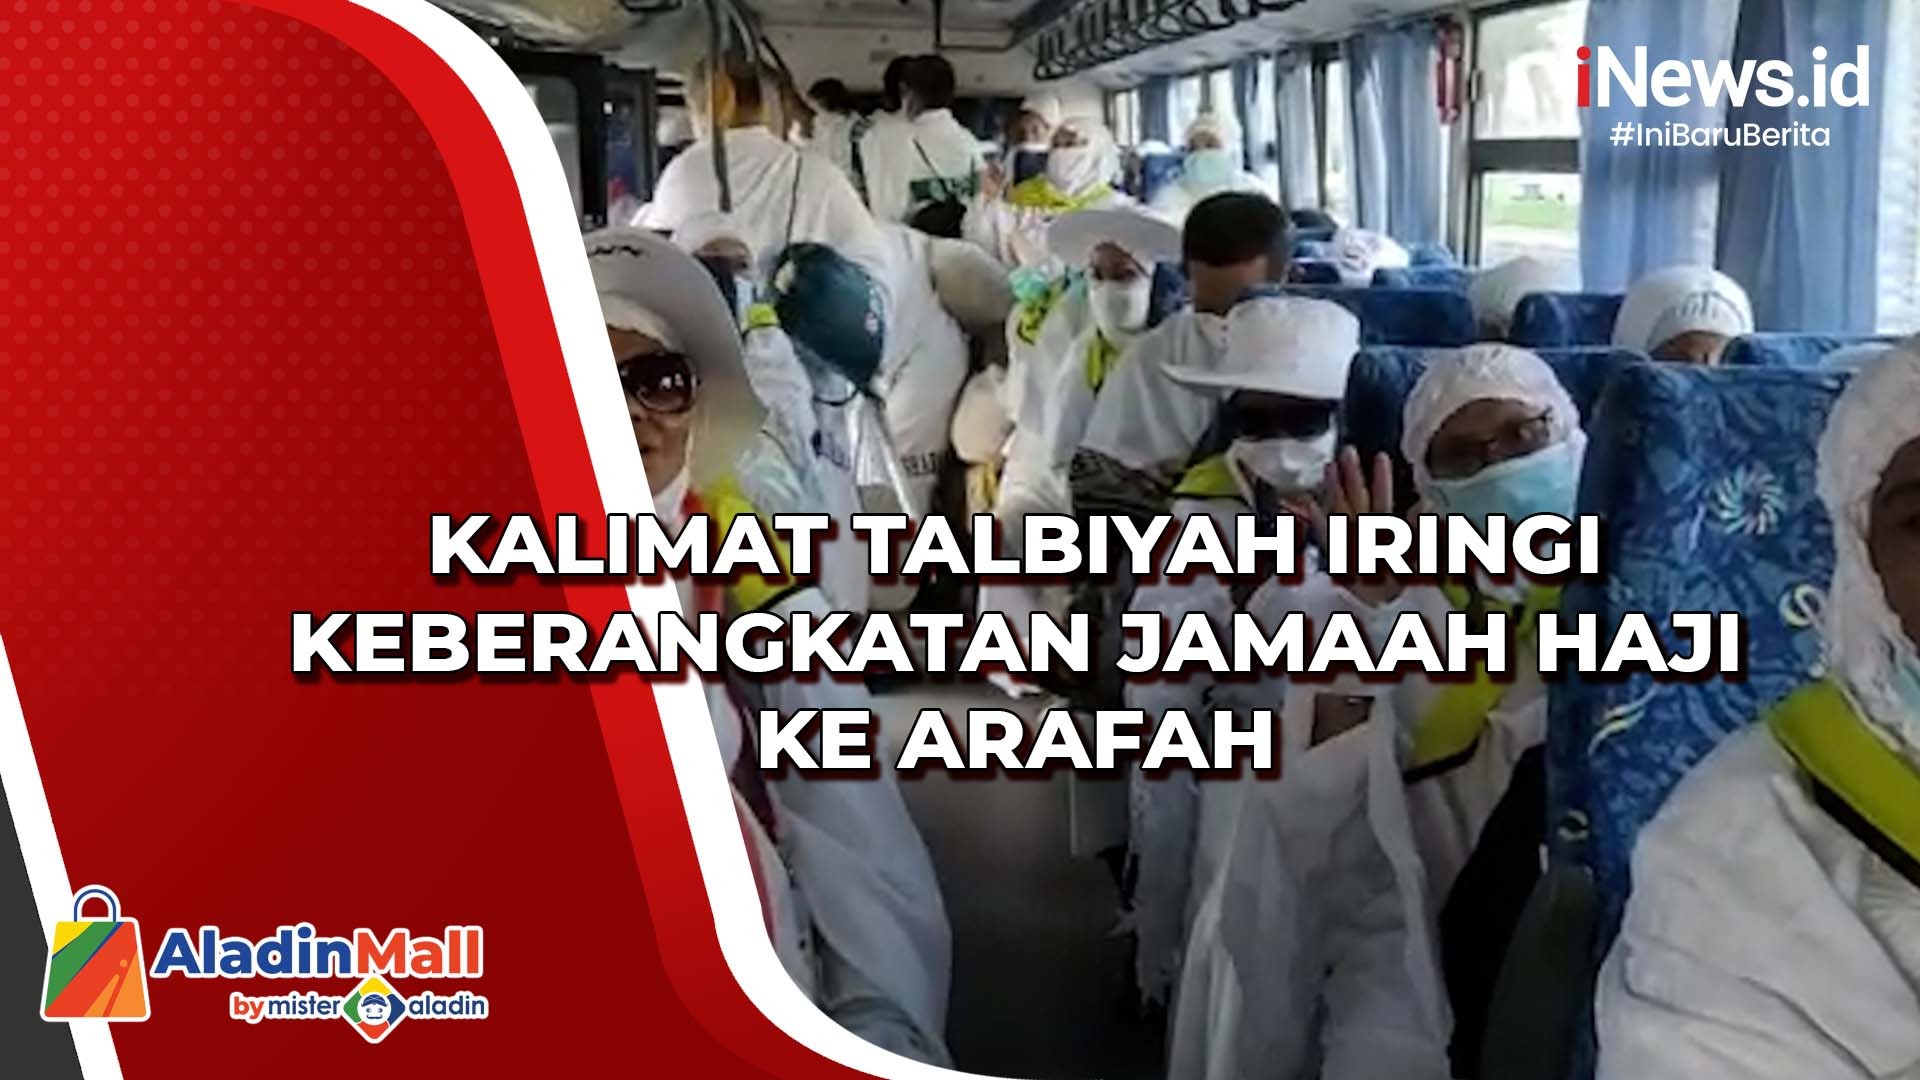 Kalimat Talbiyah Iringi Keberangkatan Jamaah Haji ke Arafah